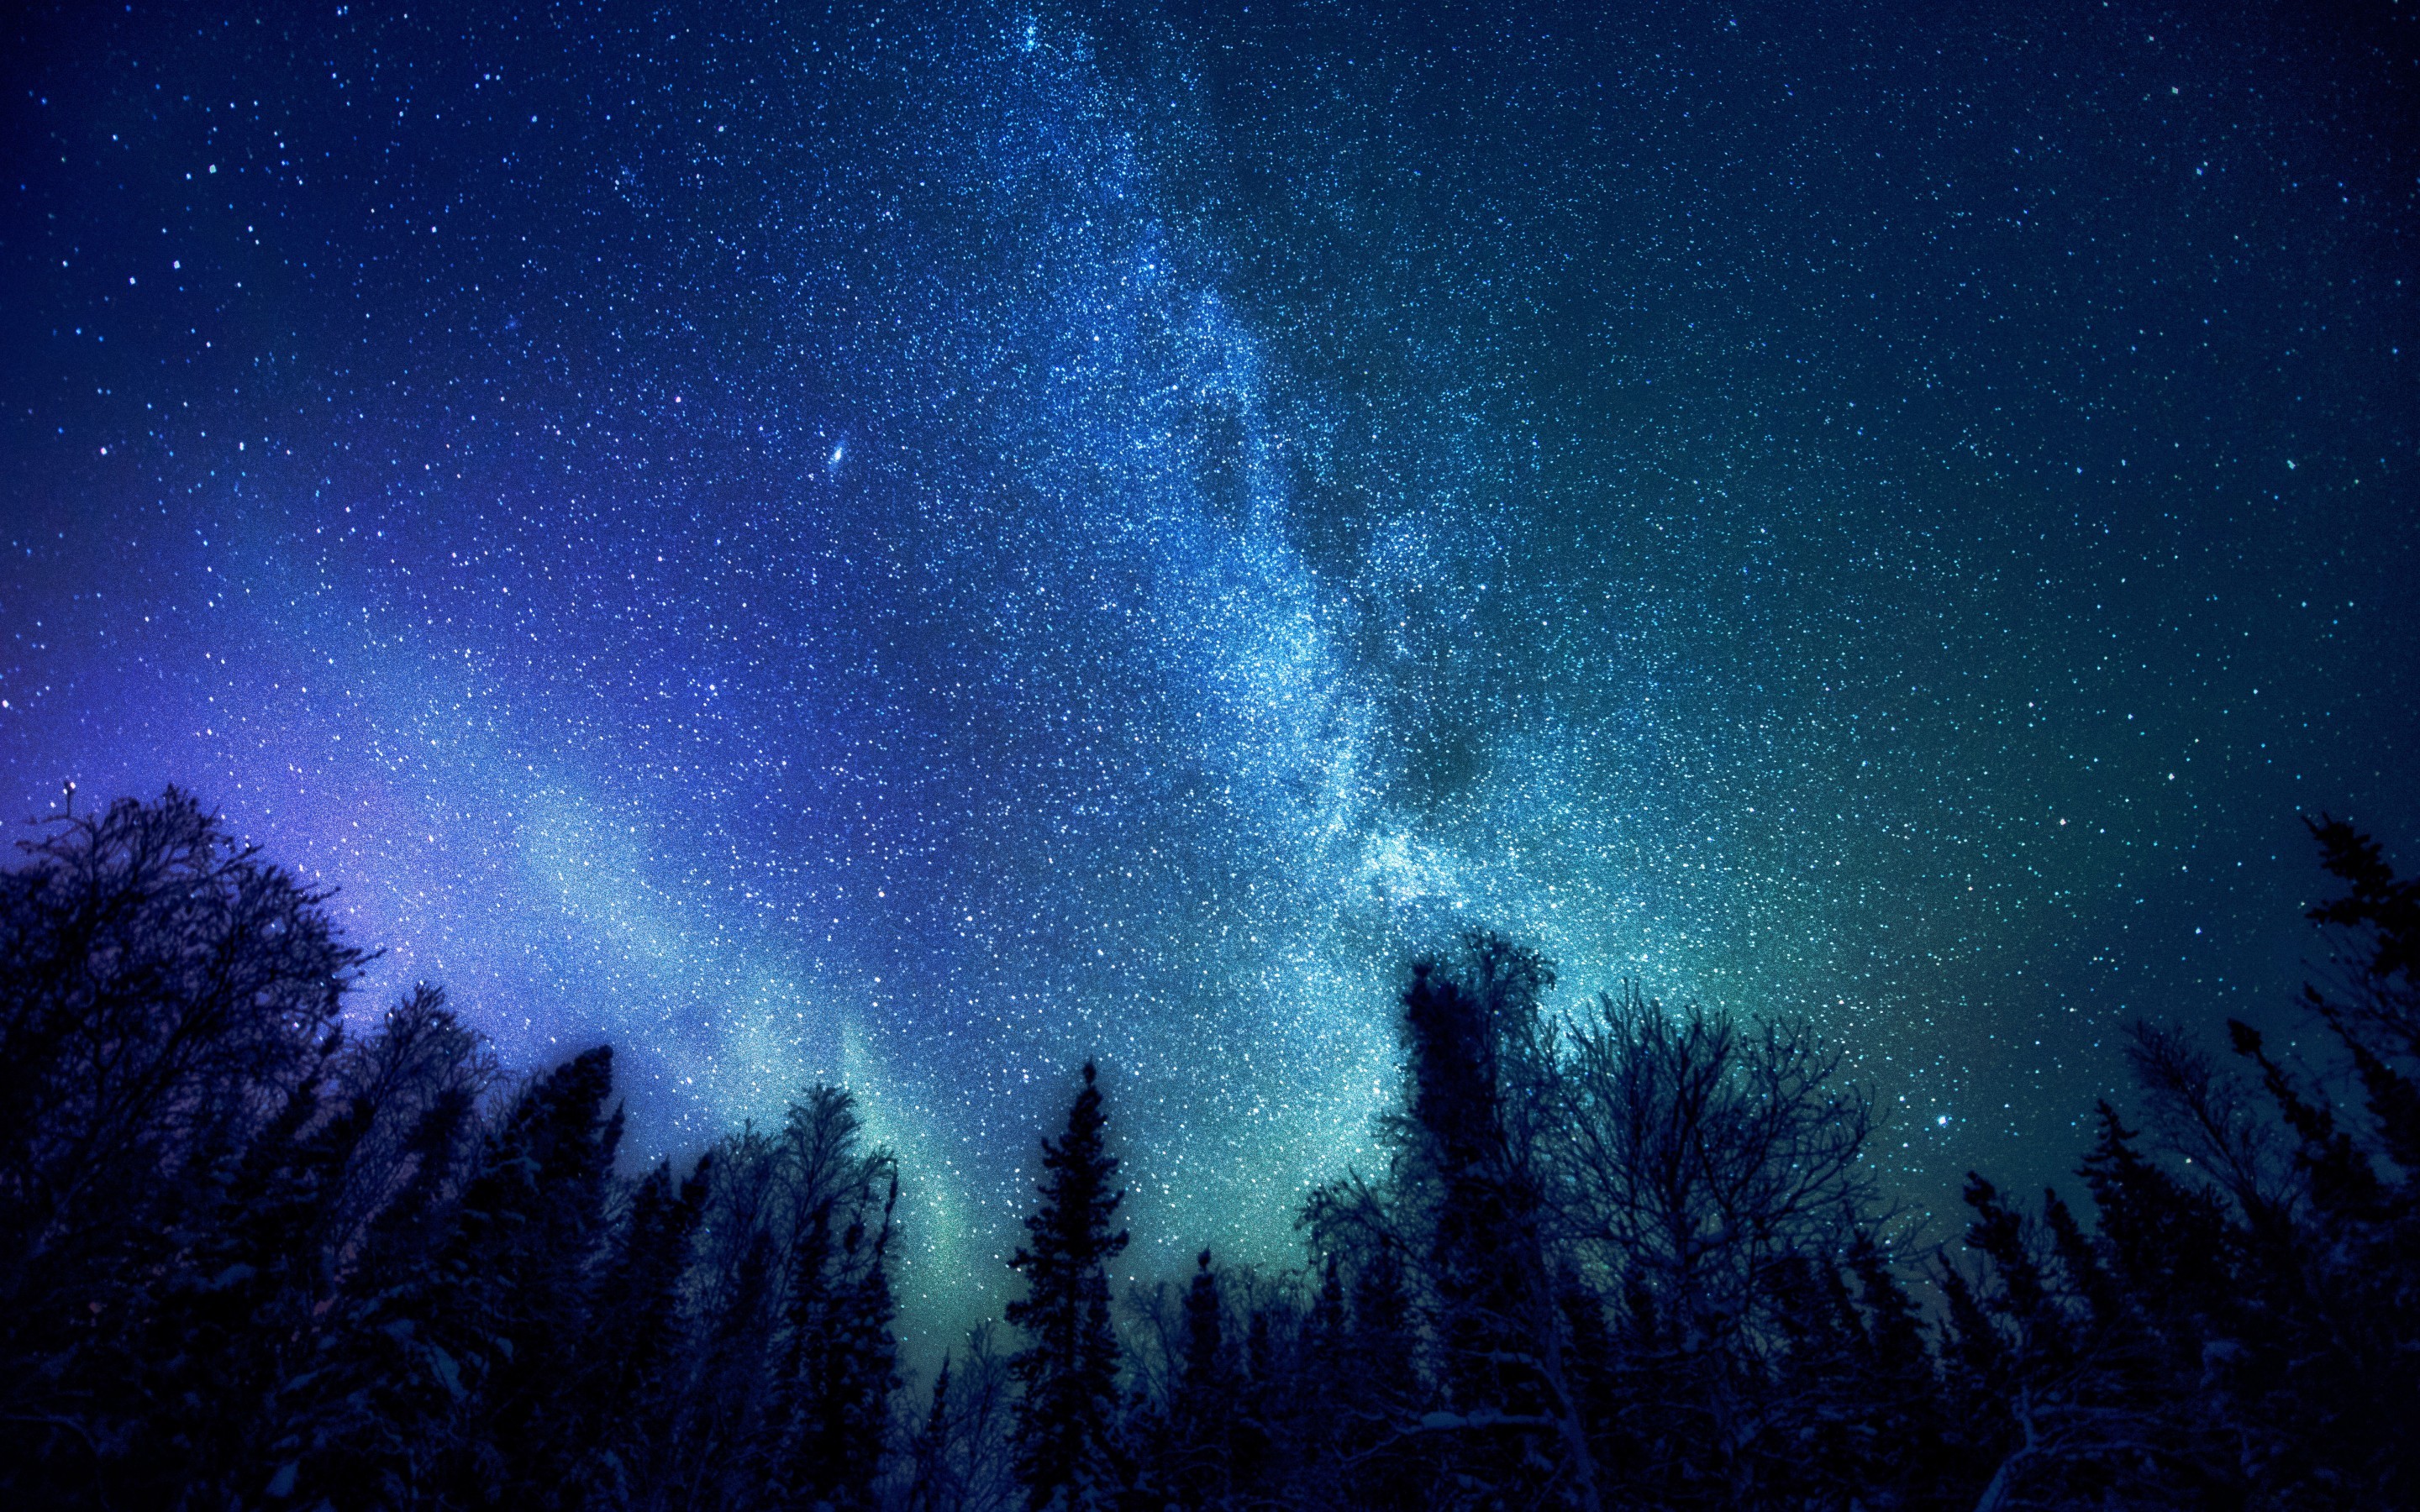 General 2880x1800 trees nature stars Milky Way sky worm's eye view outdoors night night sky blue low light